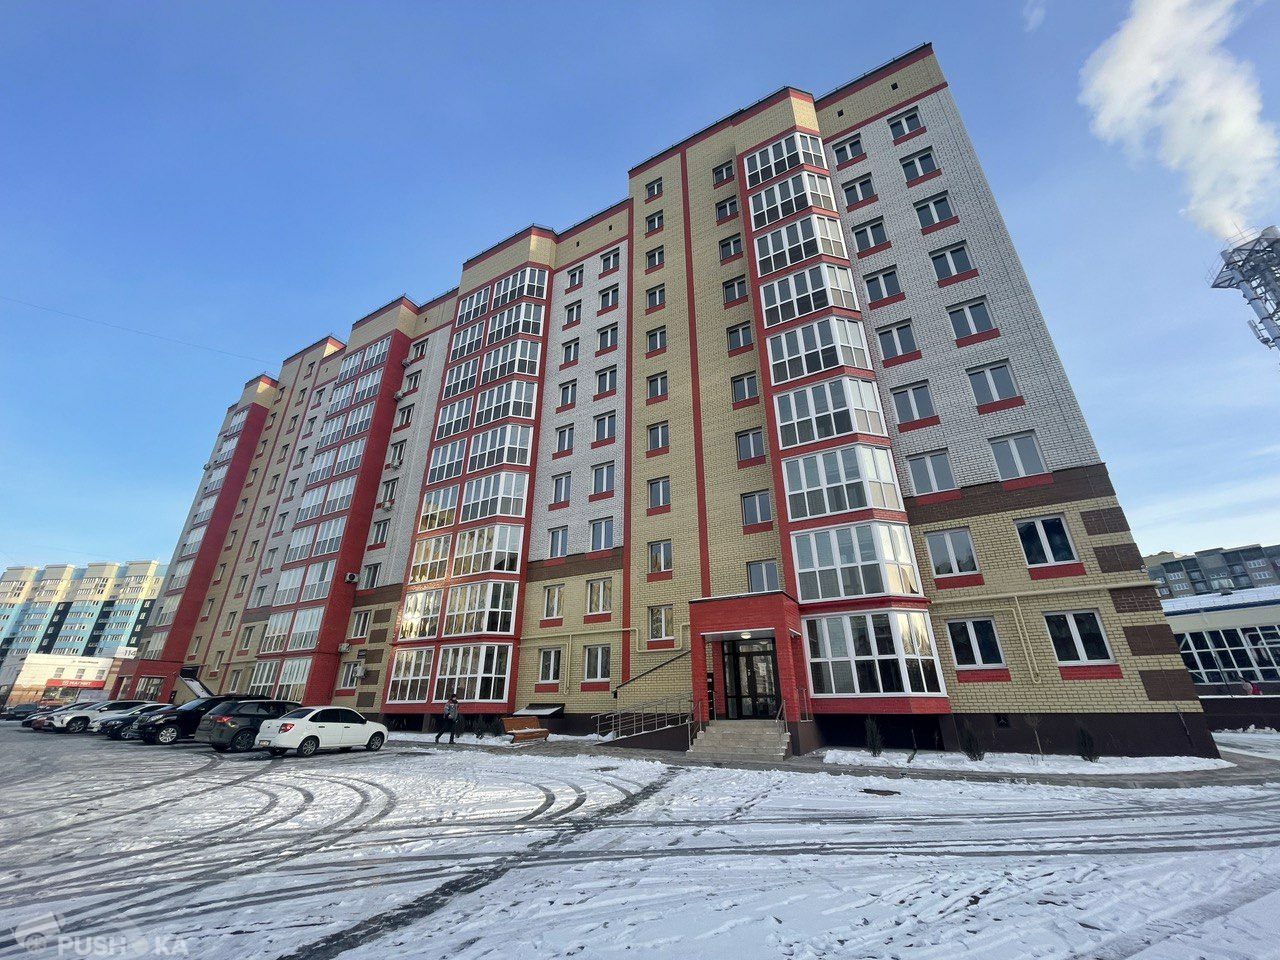 Продаётся 2-комнатная квартира 55.4 кв.м. этаж 5/9 за 4 990 000 руб 